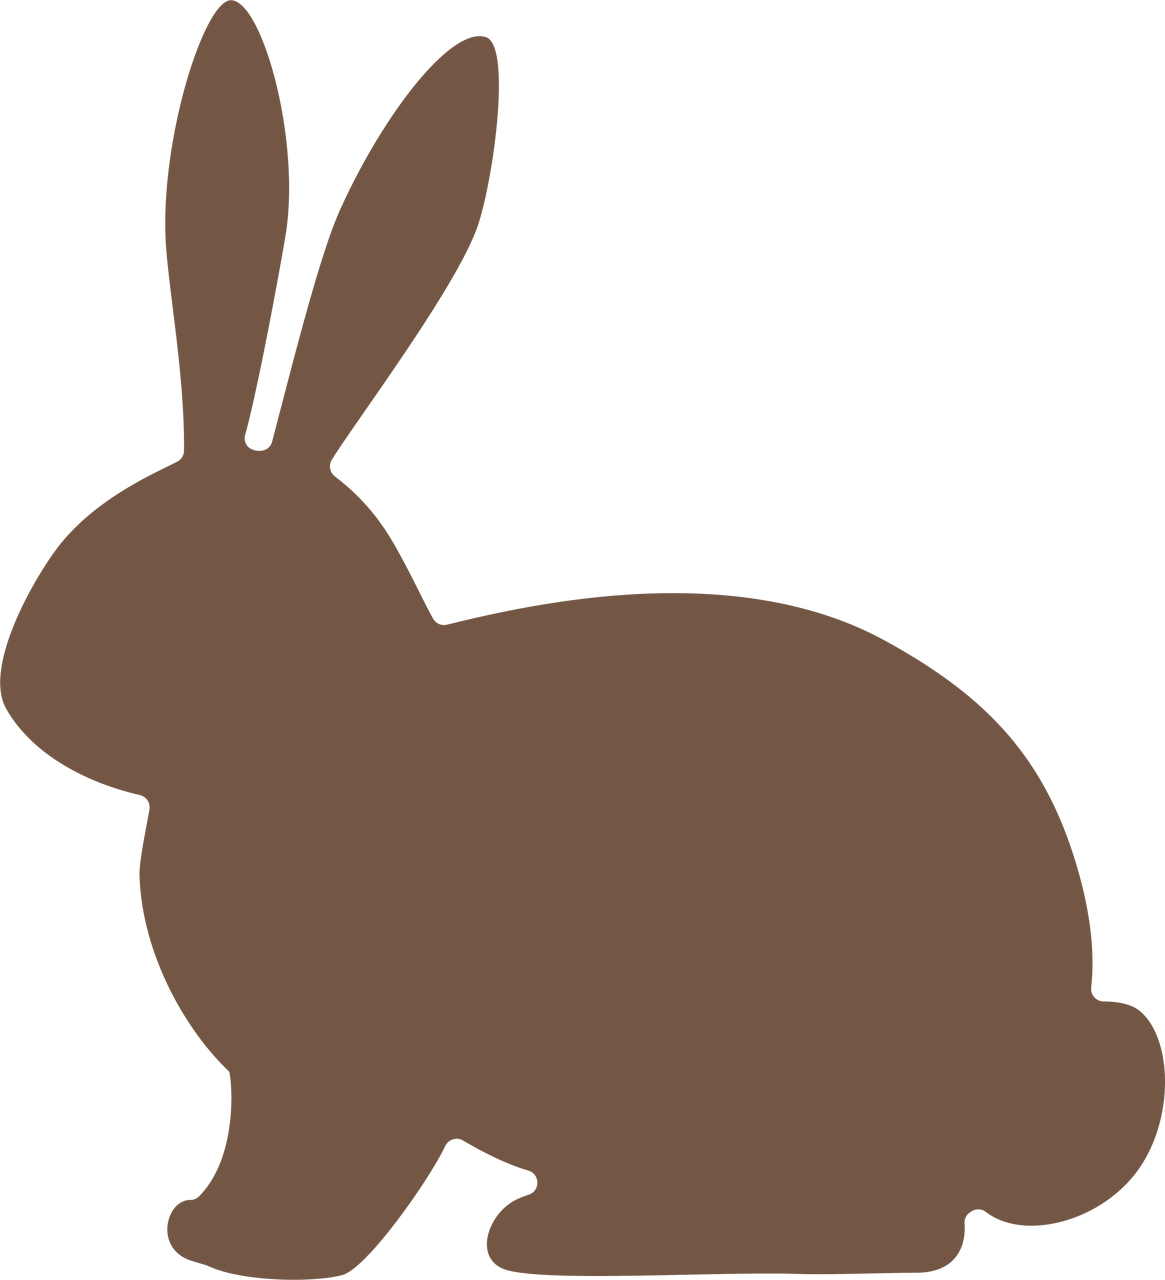 1165 X 1280 7 - Domestic Rabbit (1165x1280)